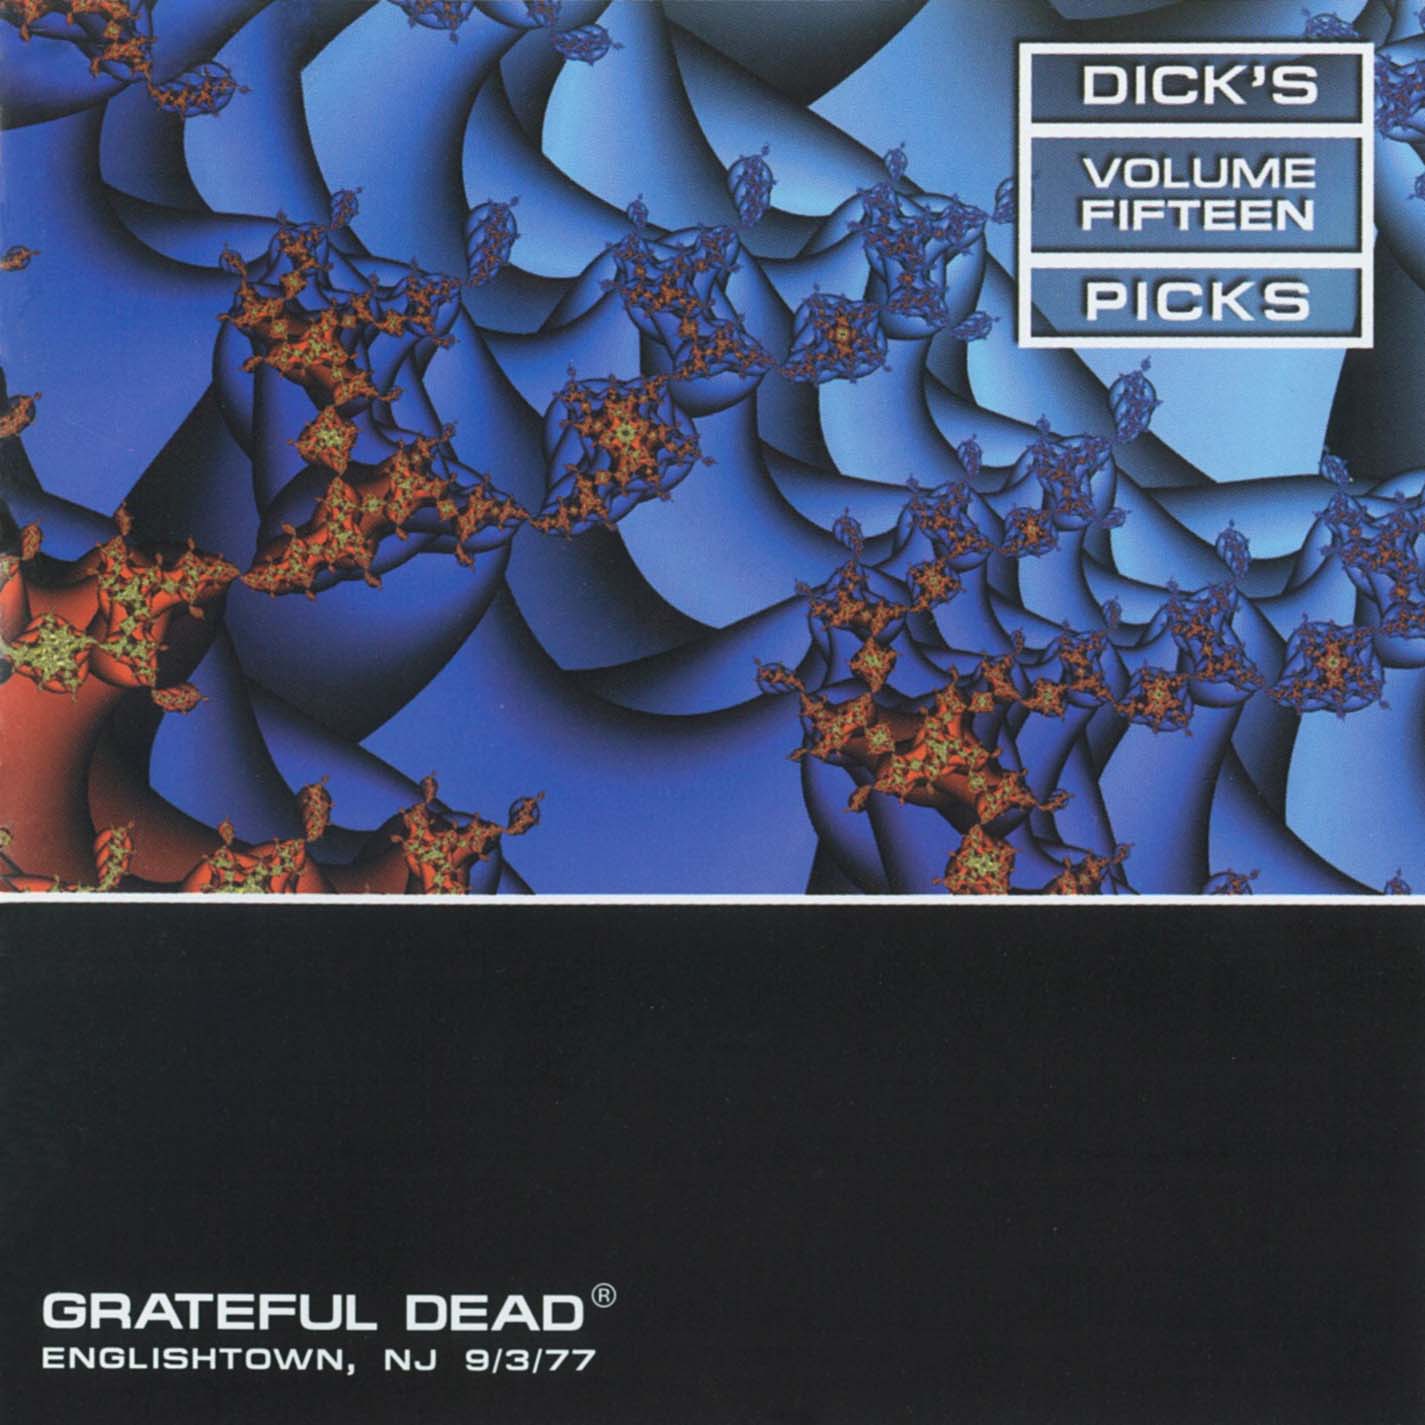 Grateful Dead Dick's Picks 15 album cover artwork